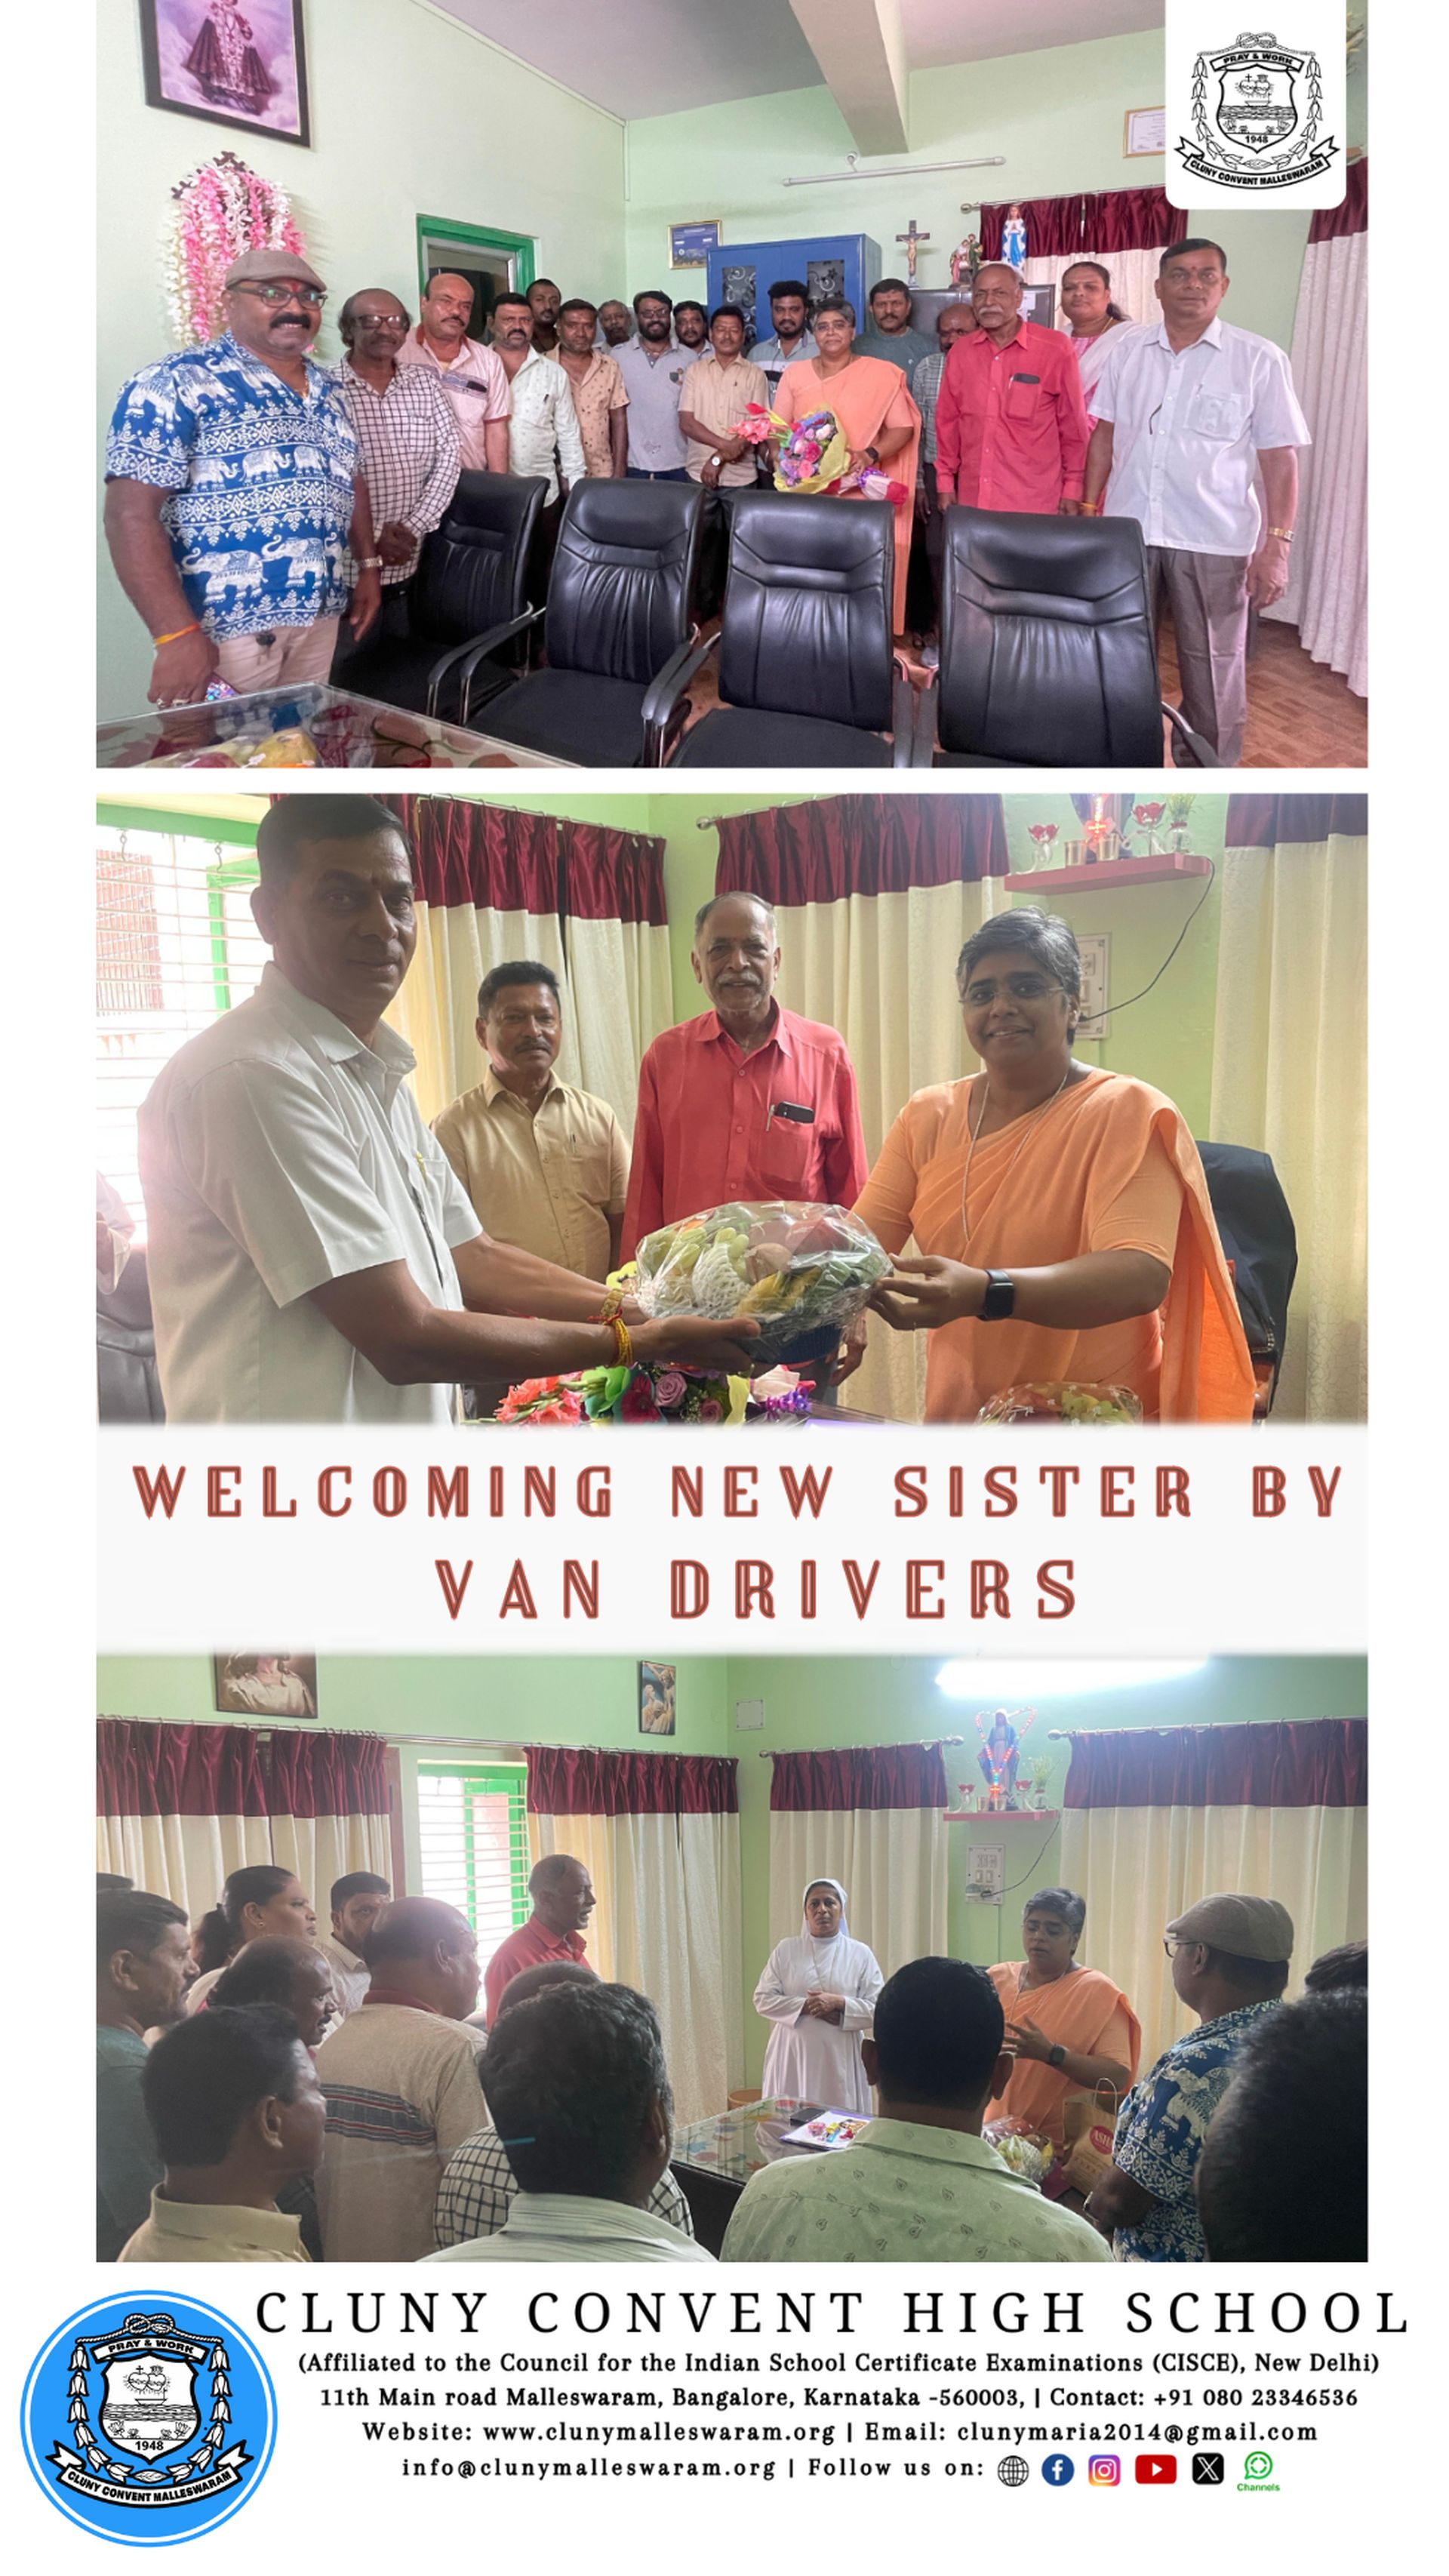 WELCOMING NEW SISTER BY VAN DRIVERS